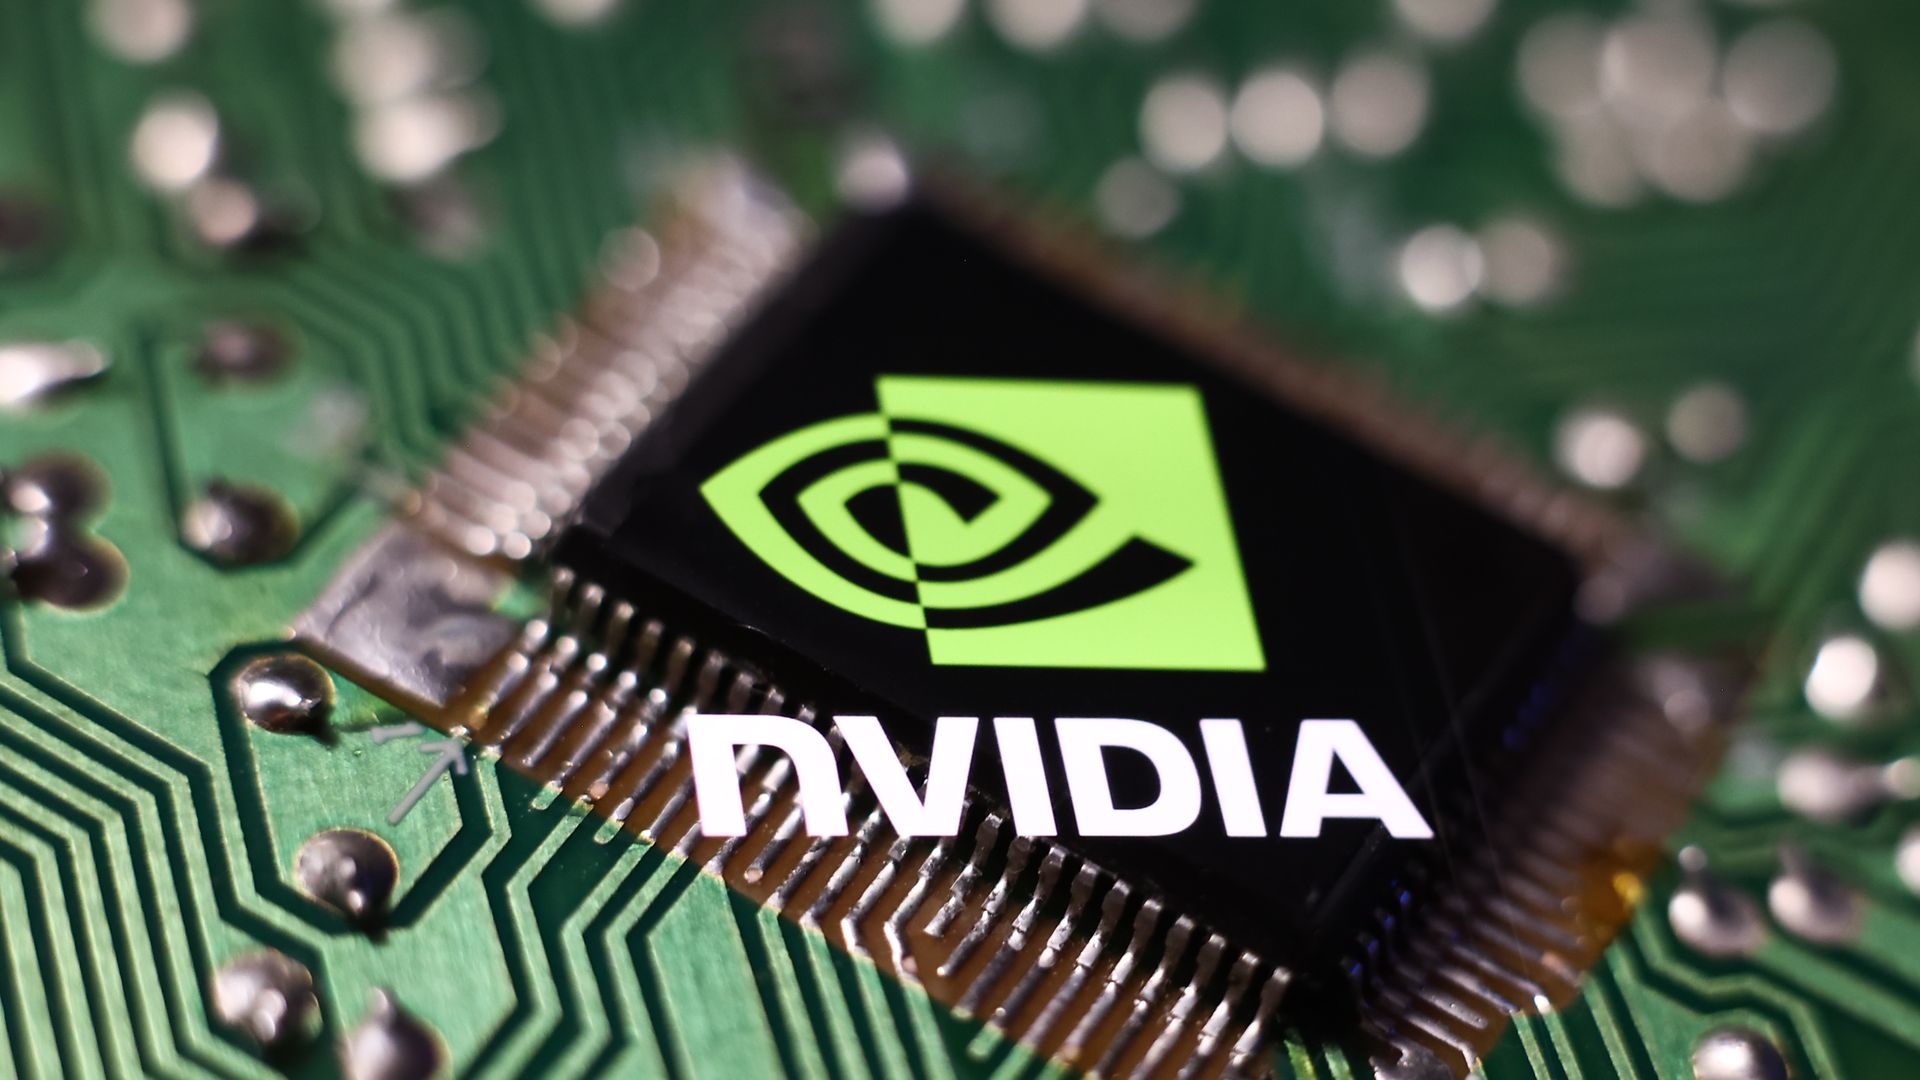 A Nvidia logo over a computer chip.